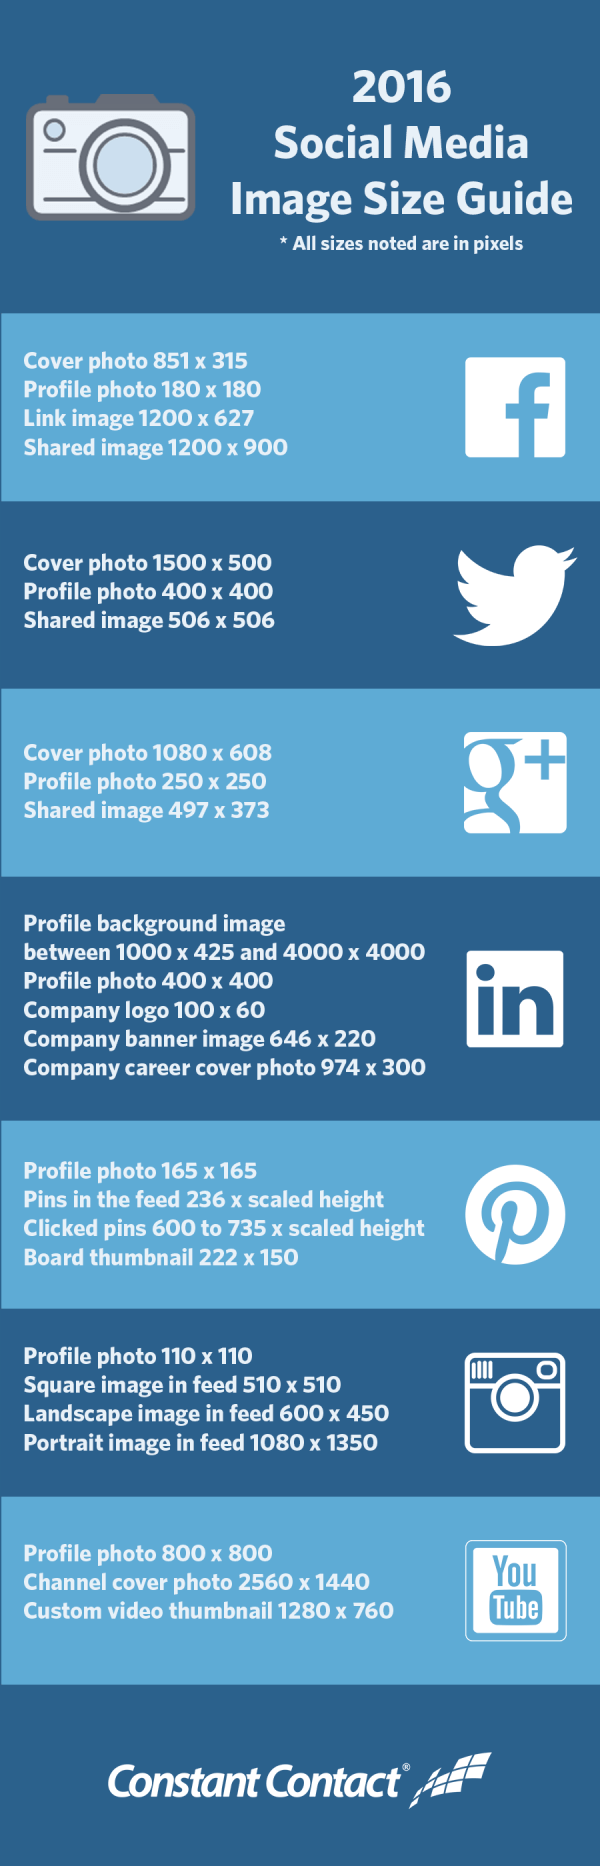 2016-Social-Media-Image-Size-Guide-final